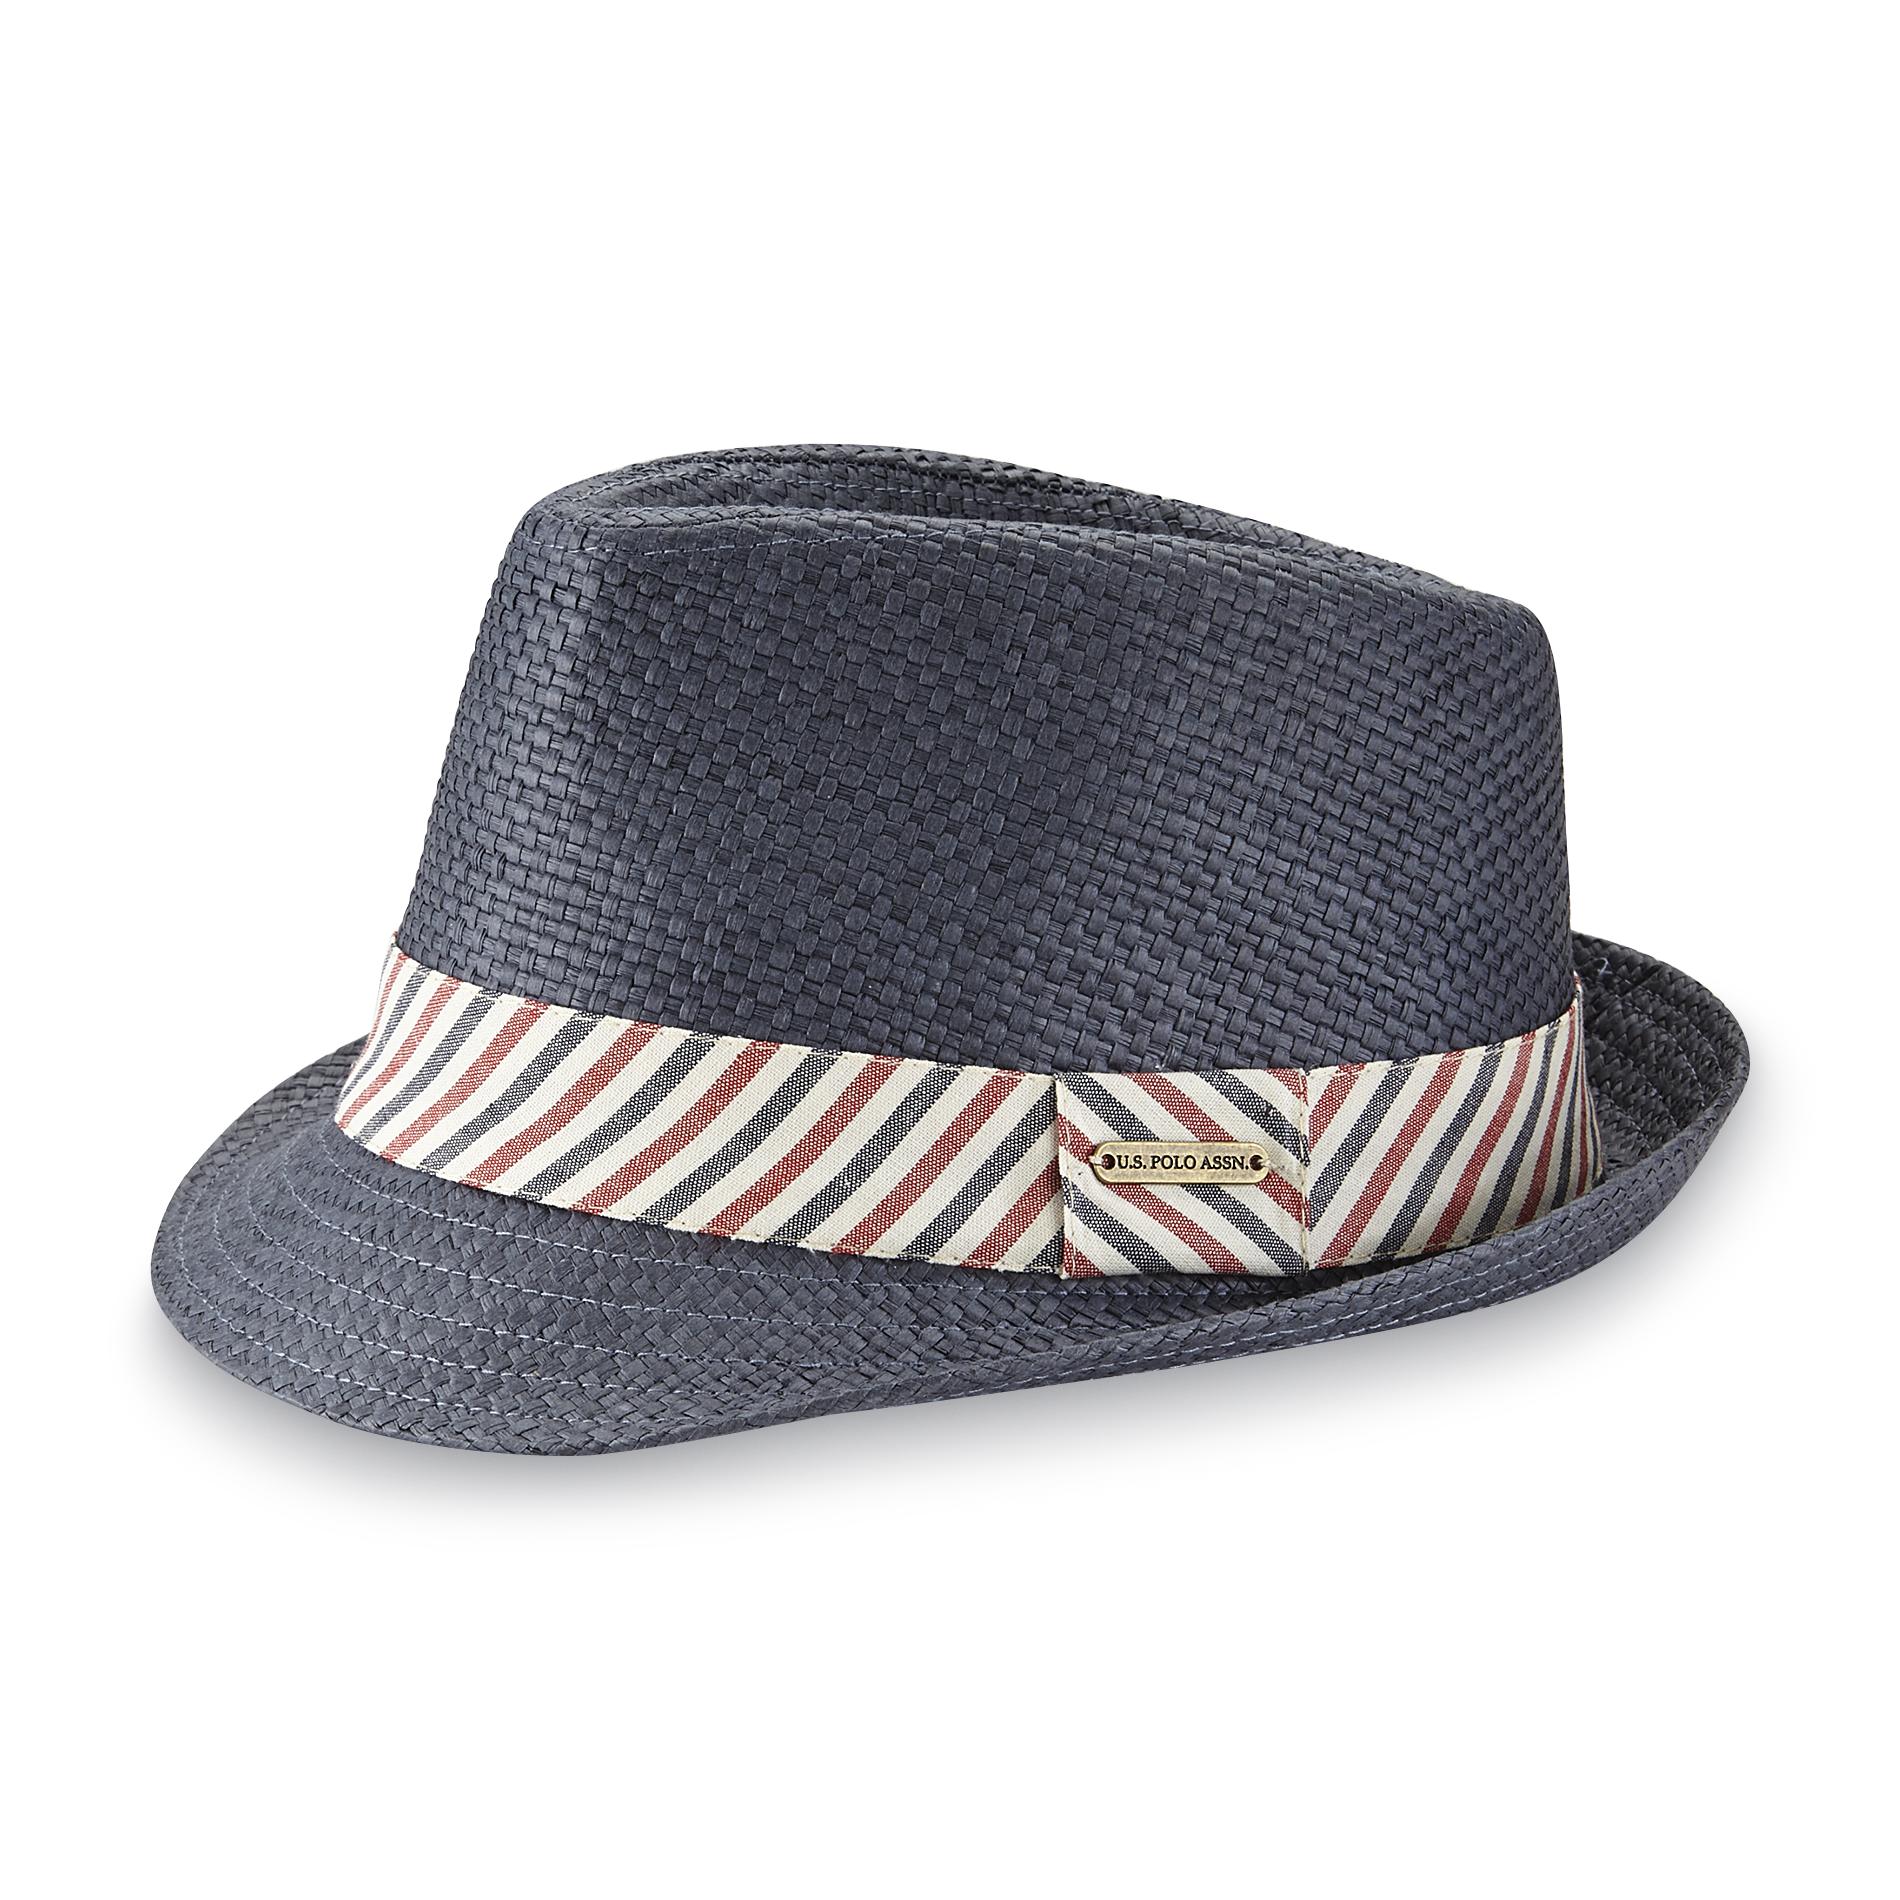 U.S. Polo Assn. Men's Straw Fedora Hat - Striped Band